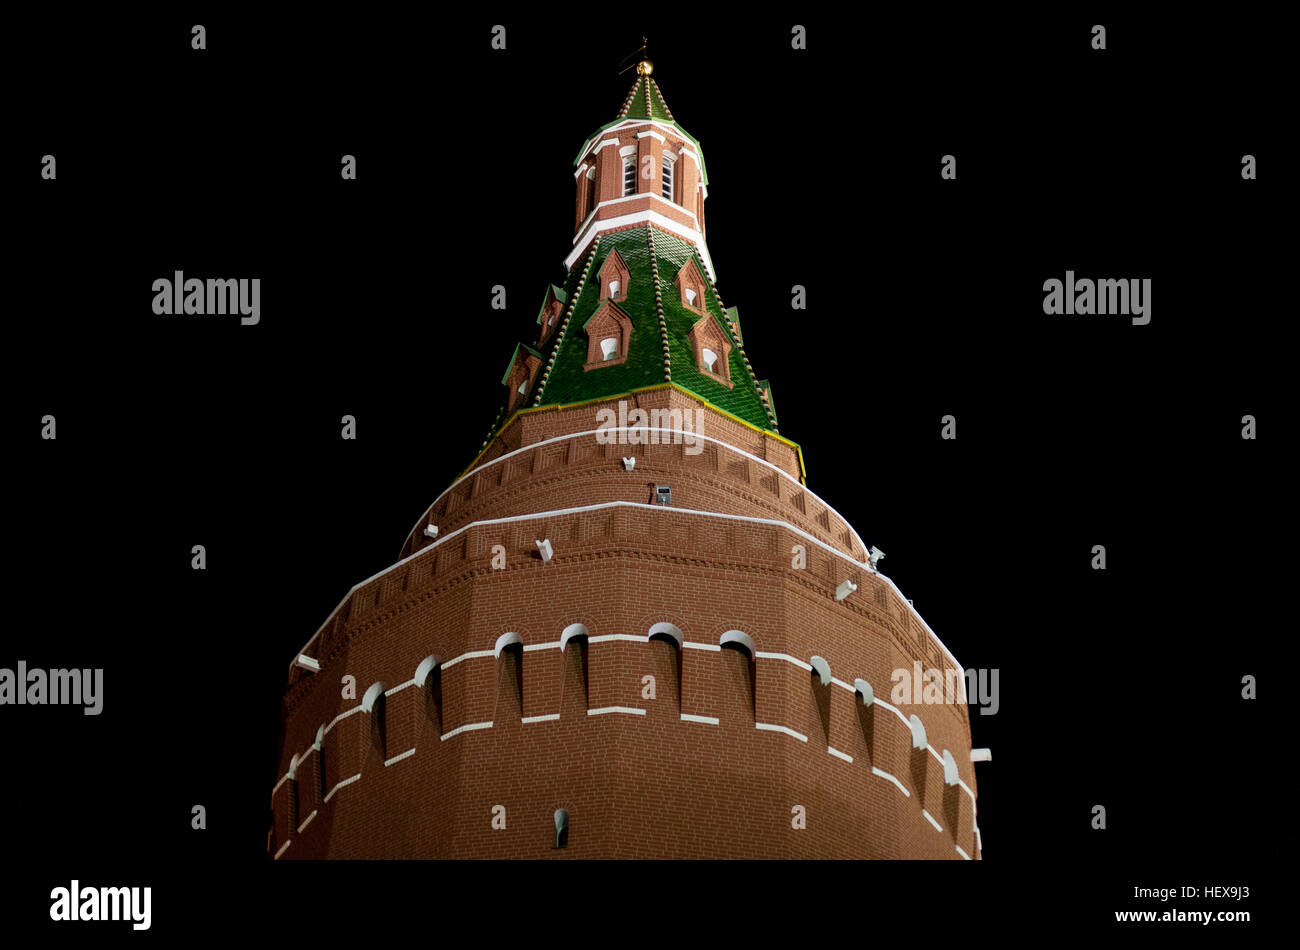 The kremlin tower illuminated at night, Moscow, Russia Stock Photo